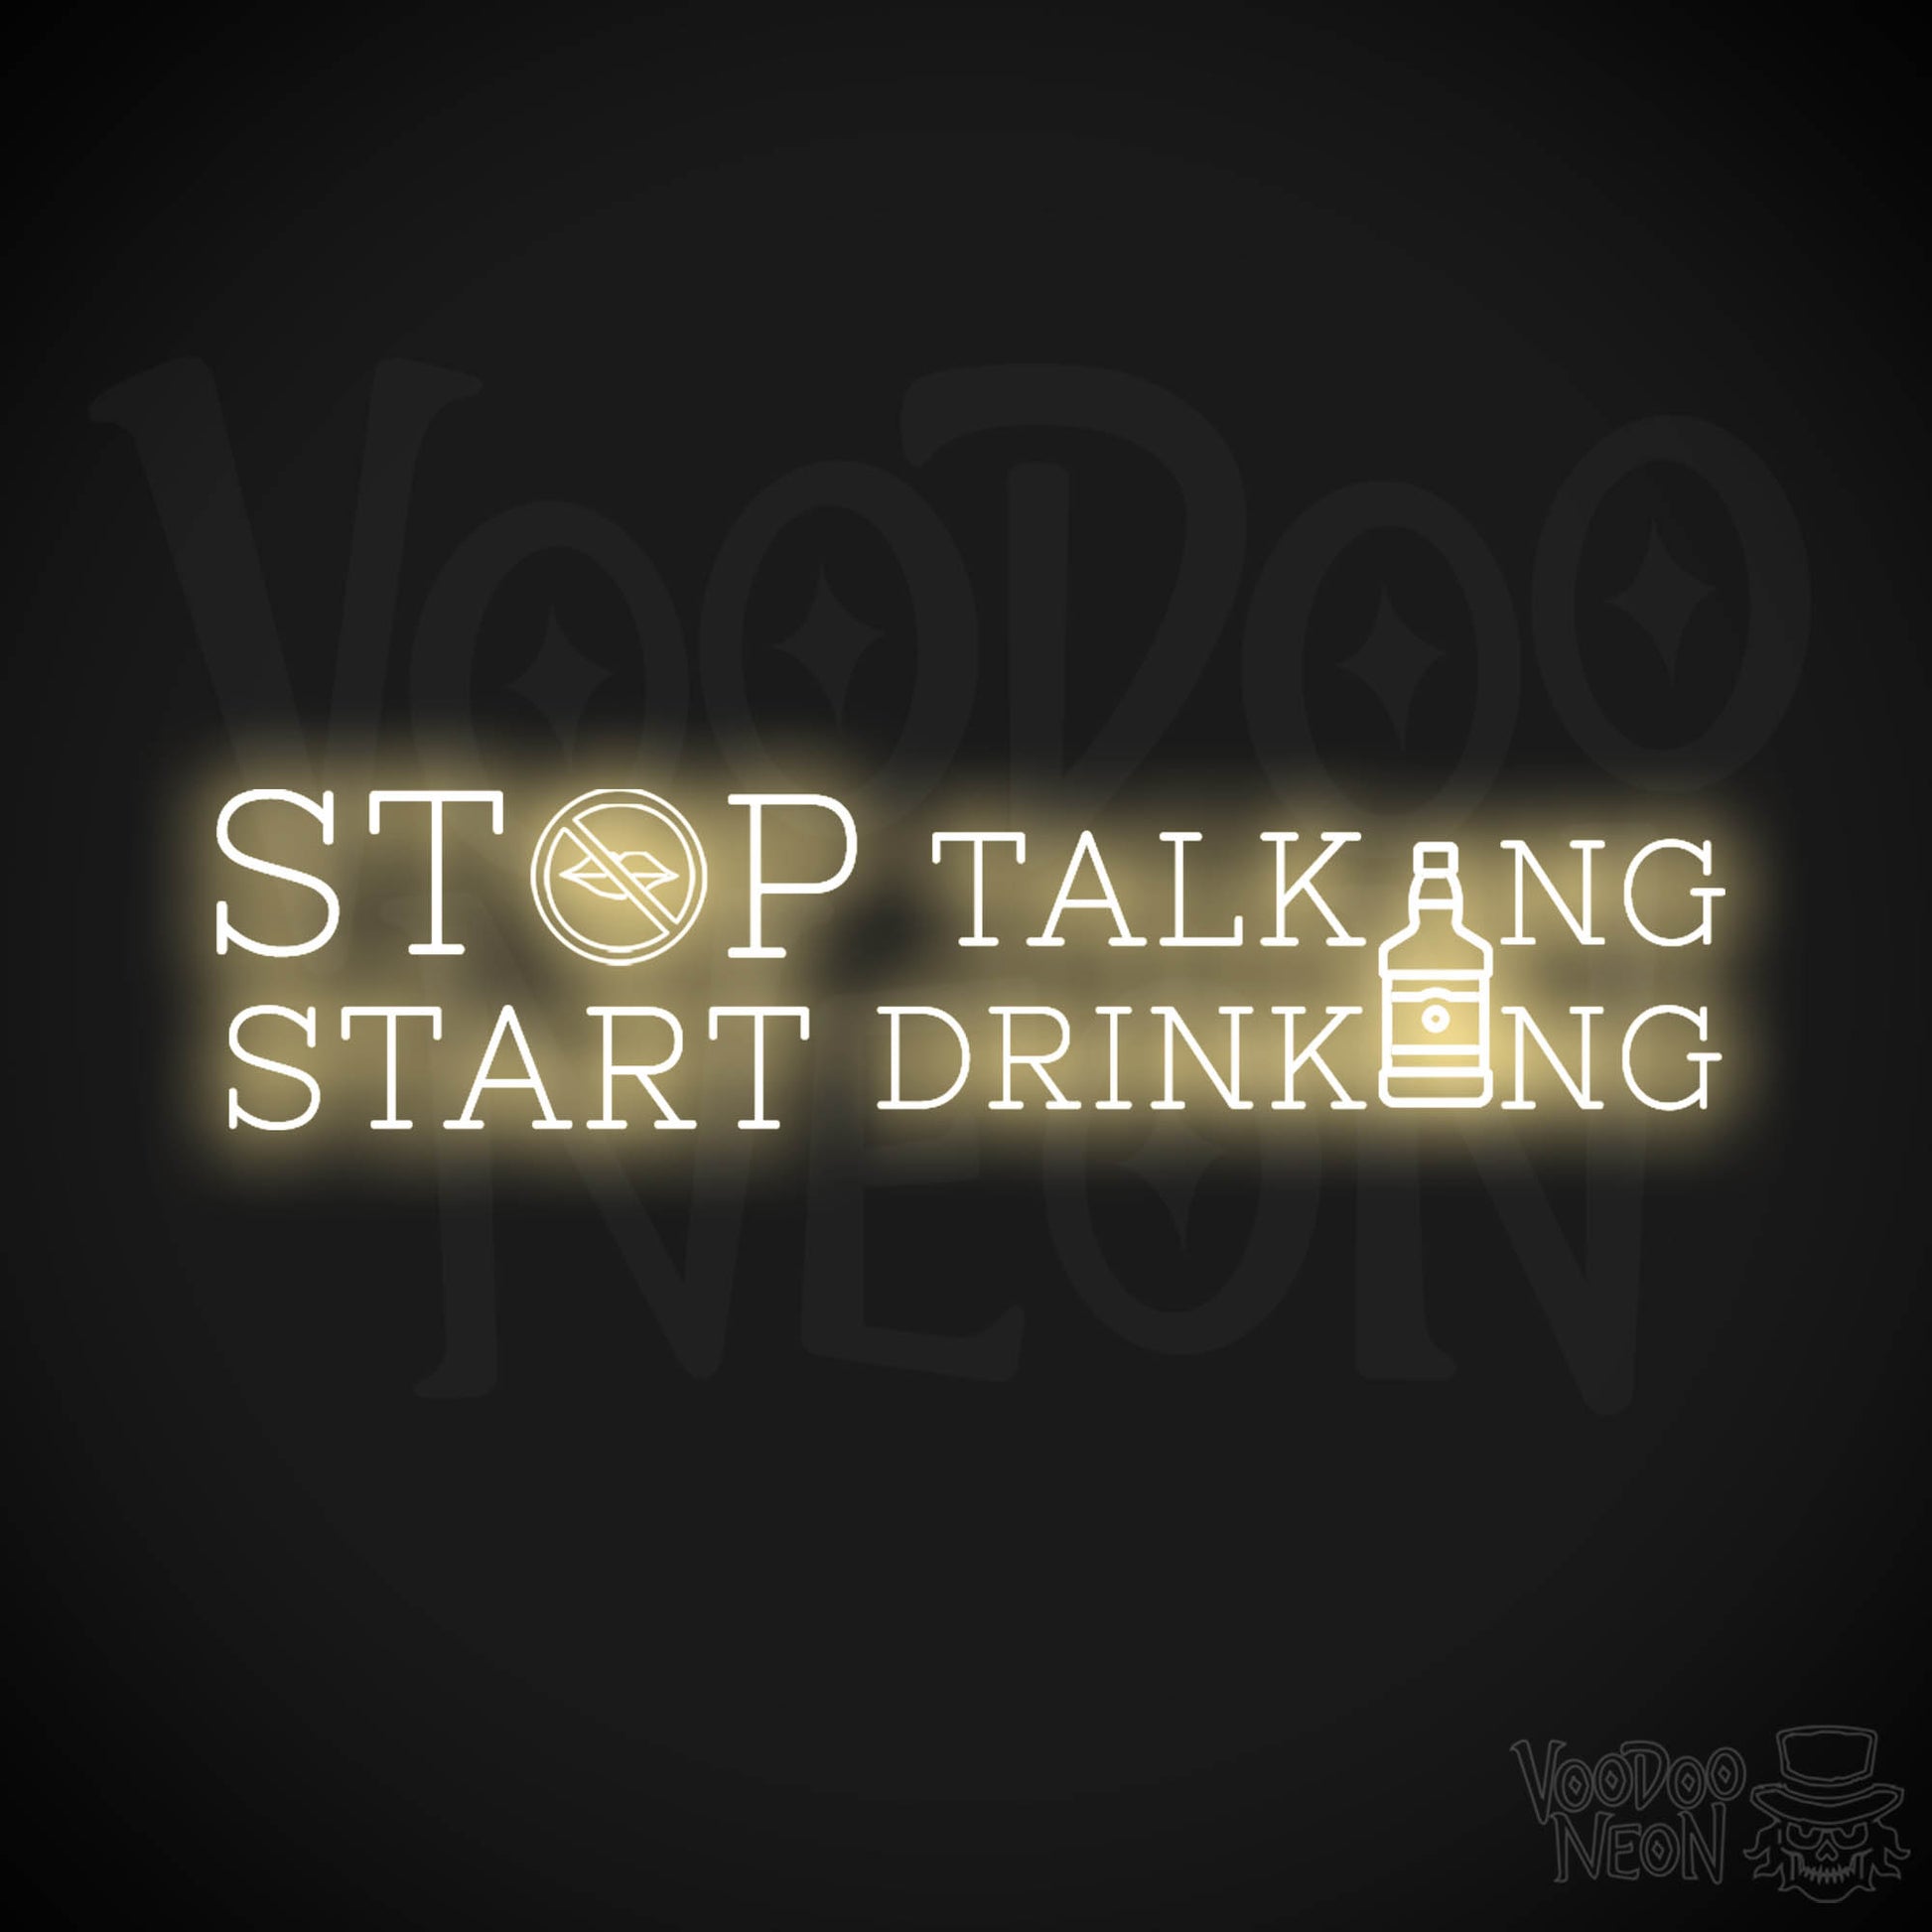 Stop Talking Start Drinking Neon Sign - Stop Talking Start Drinking Sign - Color Warm White